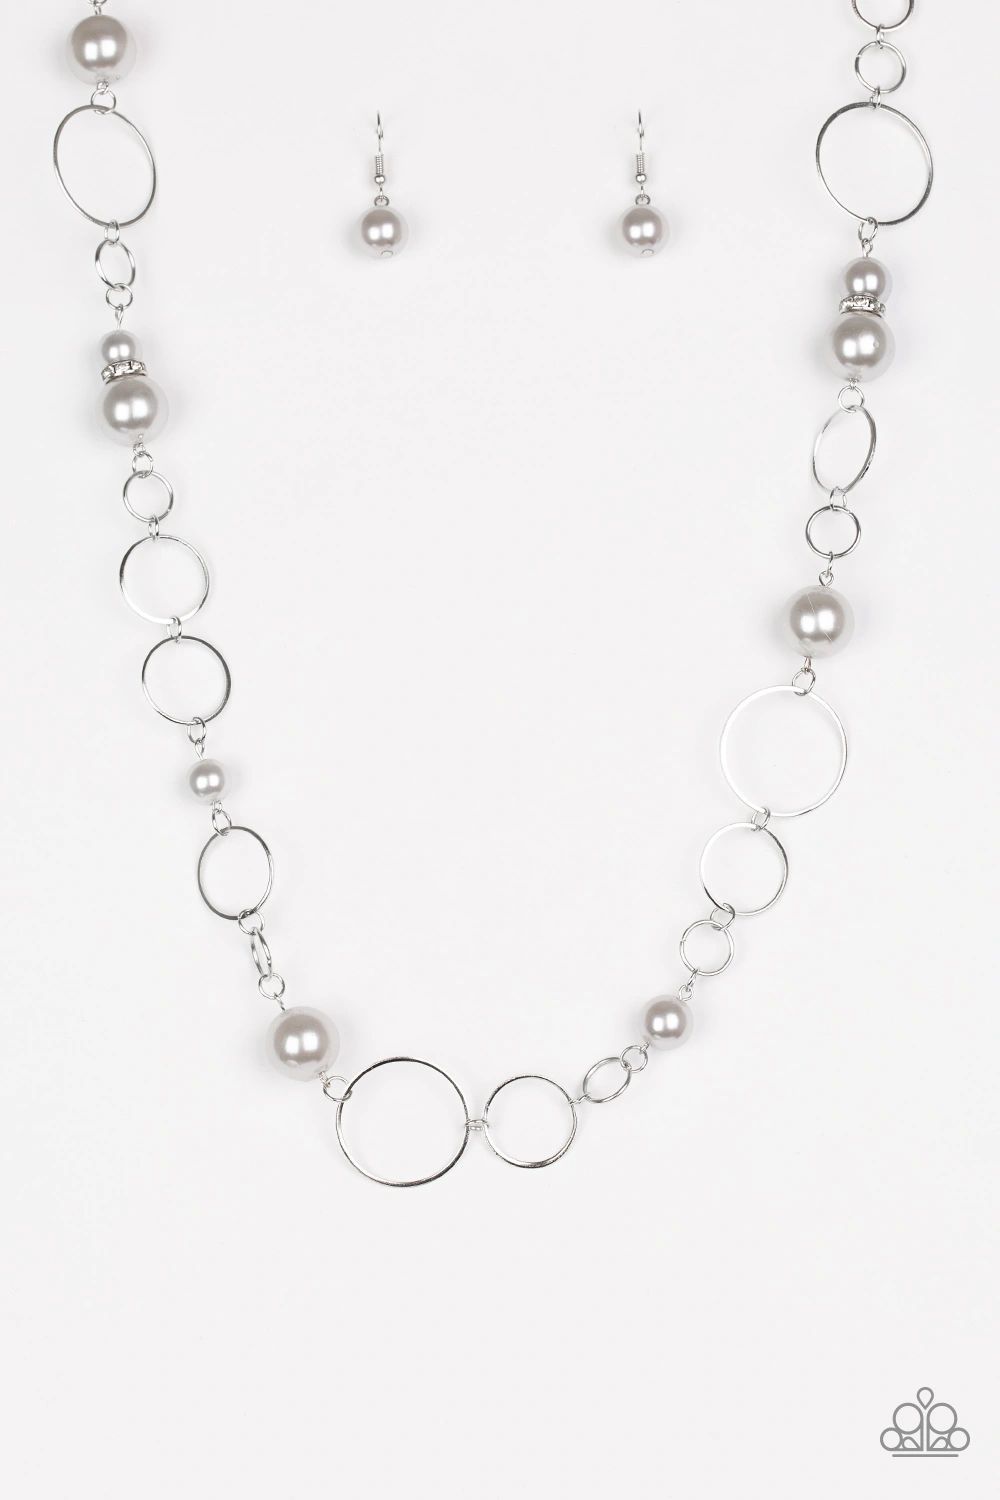 Lovely Lady Luck - Silver Necklace freeshipping - JewLz4u Gemstone Gallery